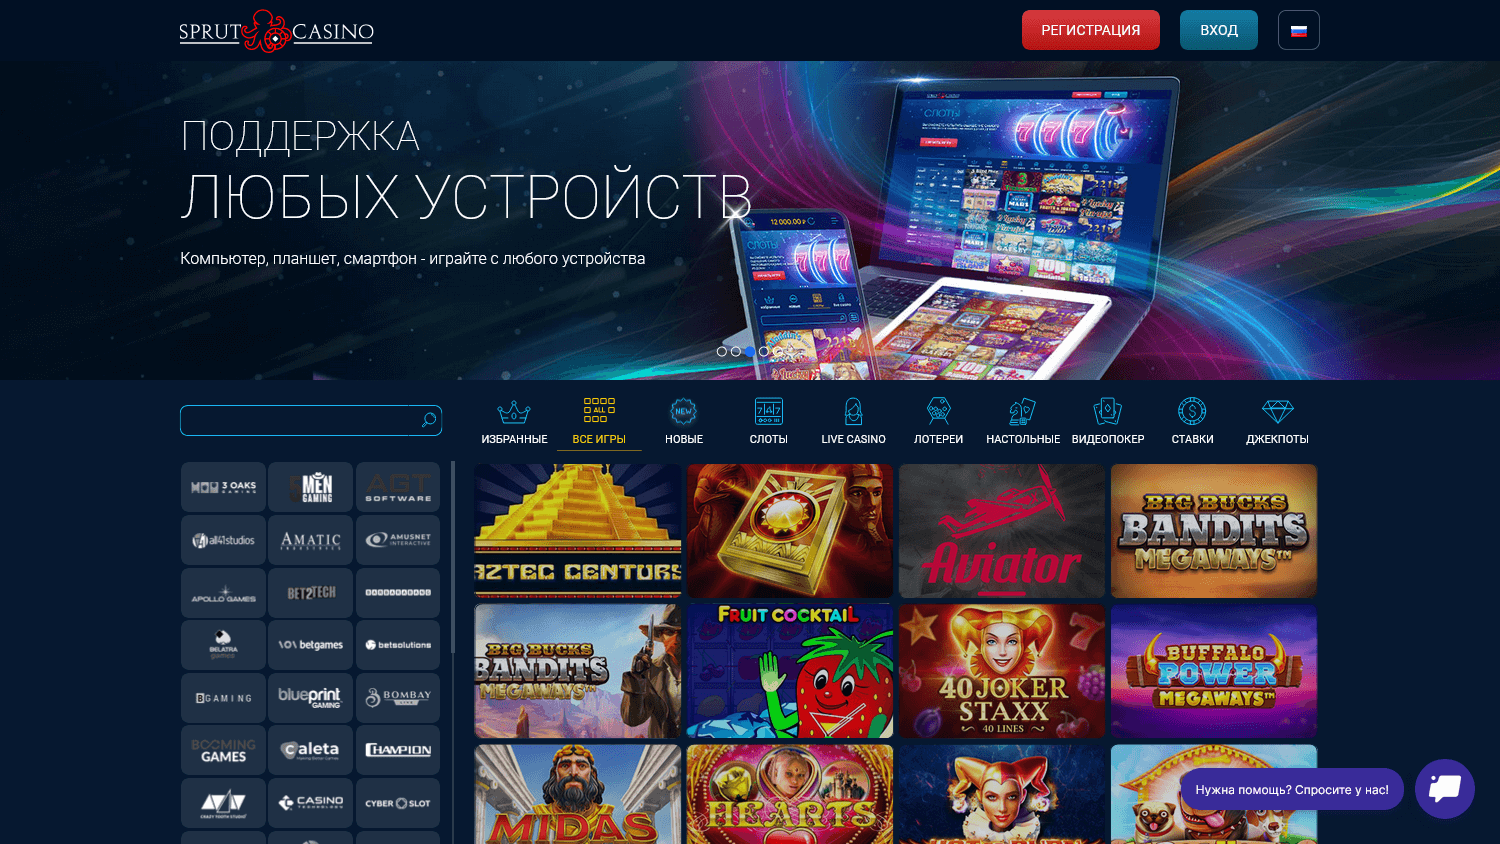 sprut_casino_homepage_desktop